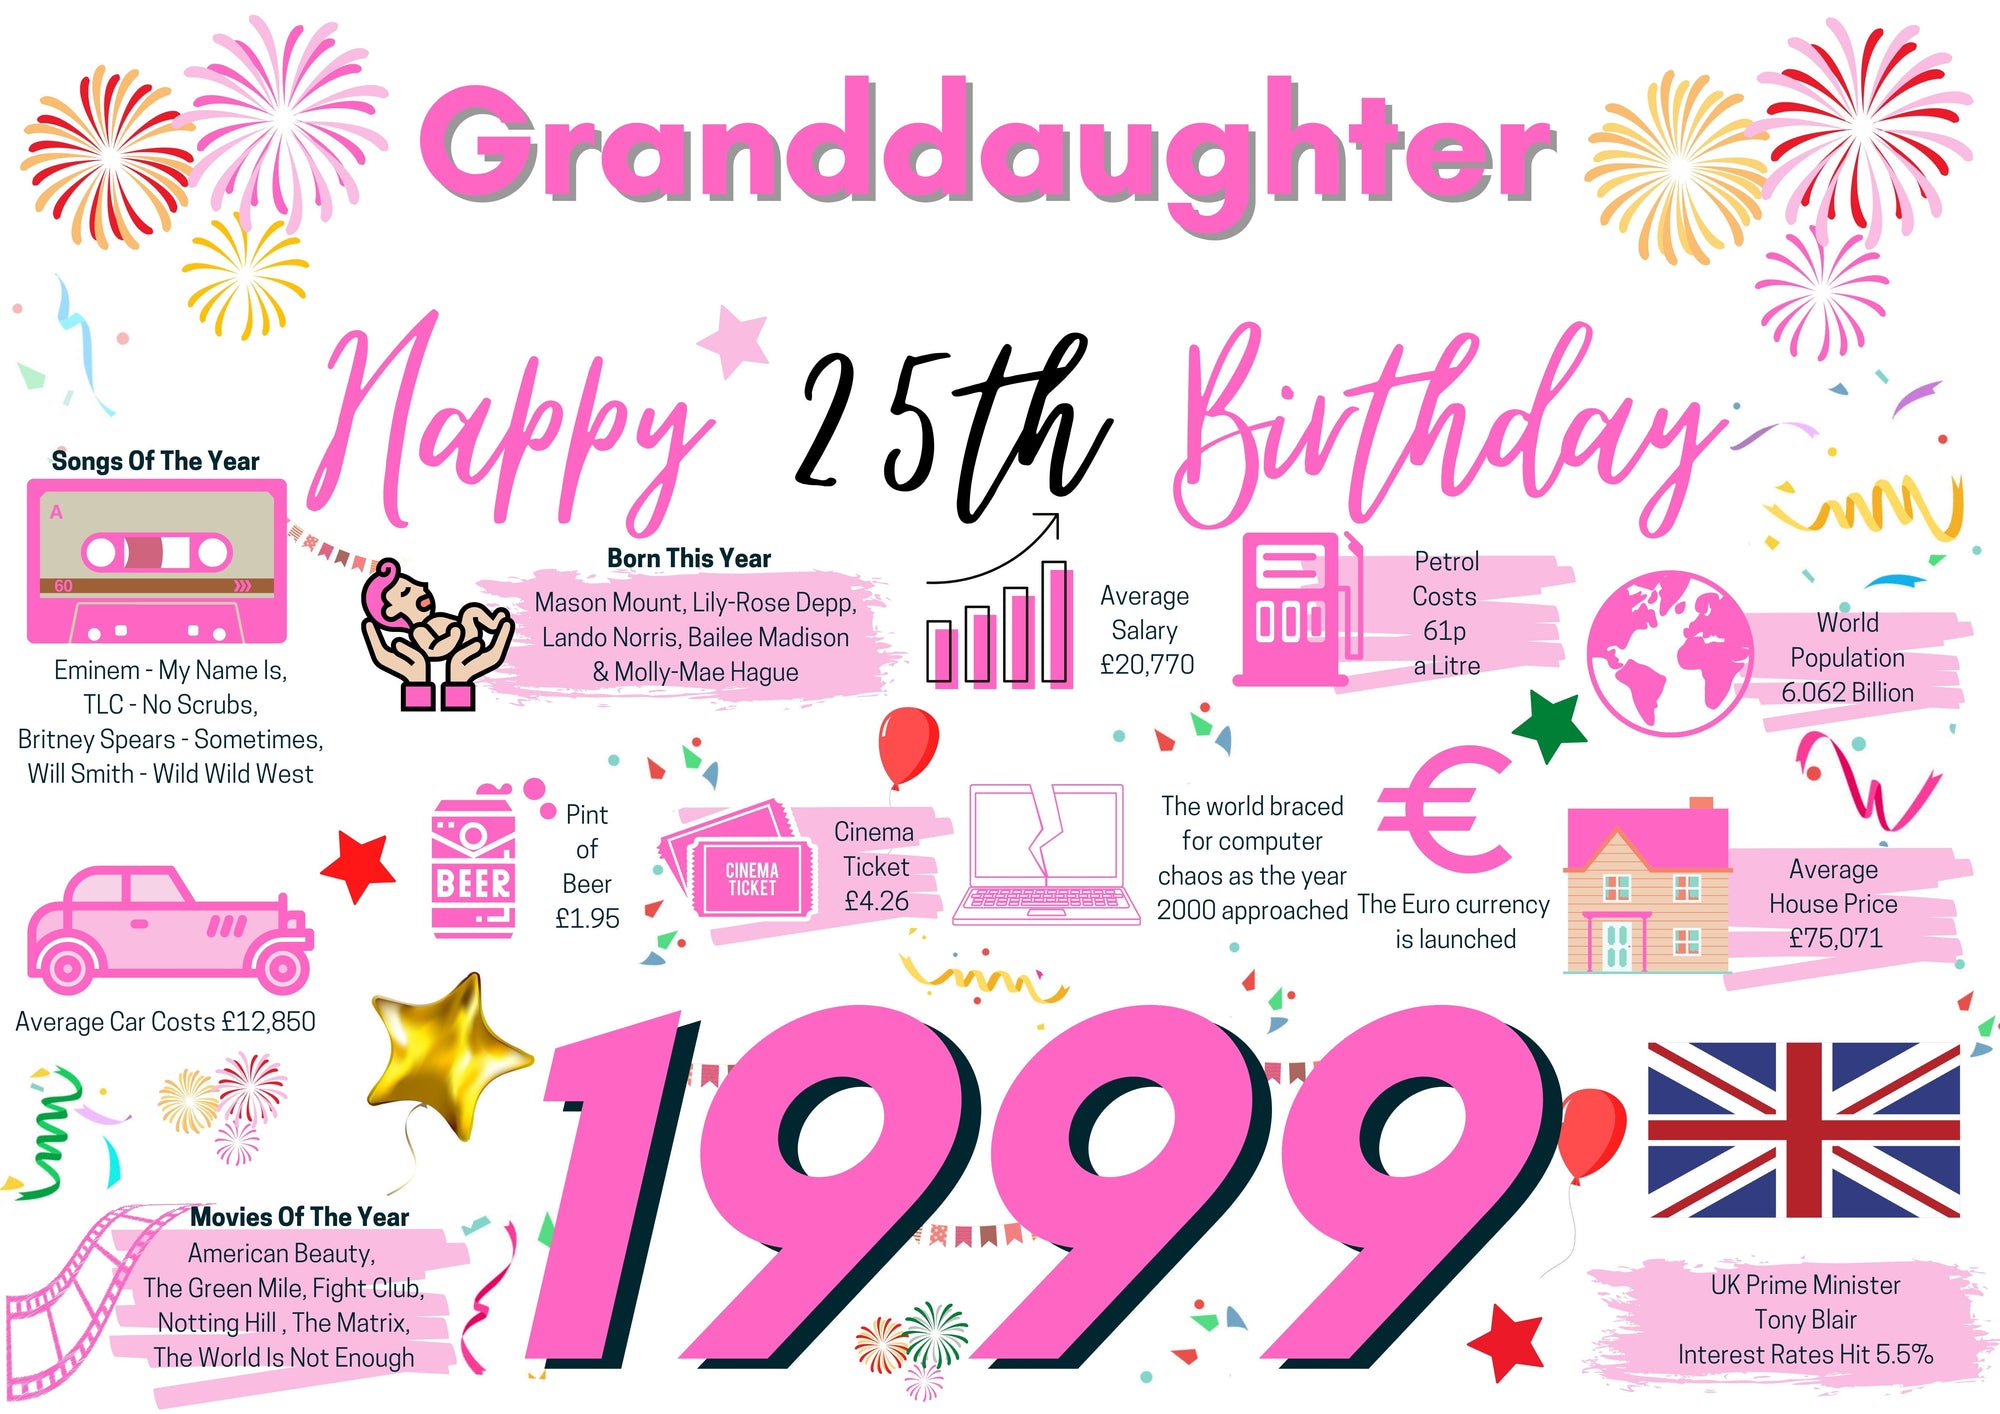 25th Birthday Card For Granddaughter, Born In 1999 Facts Milestone